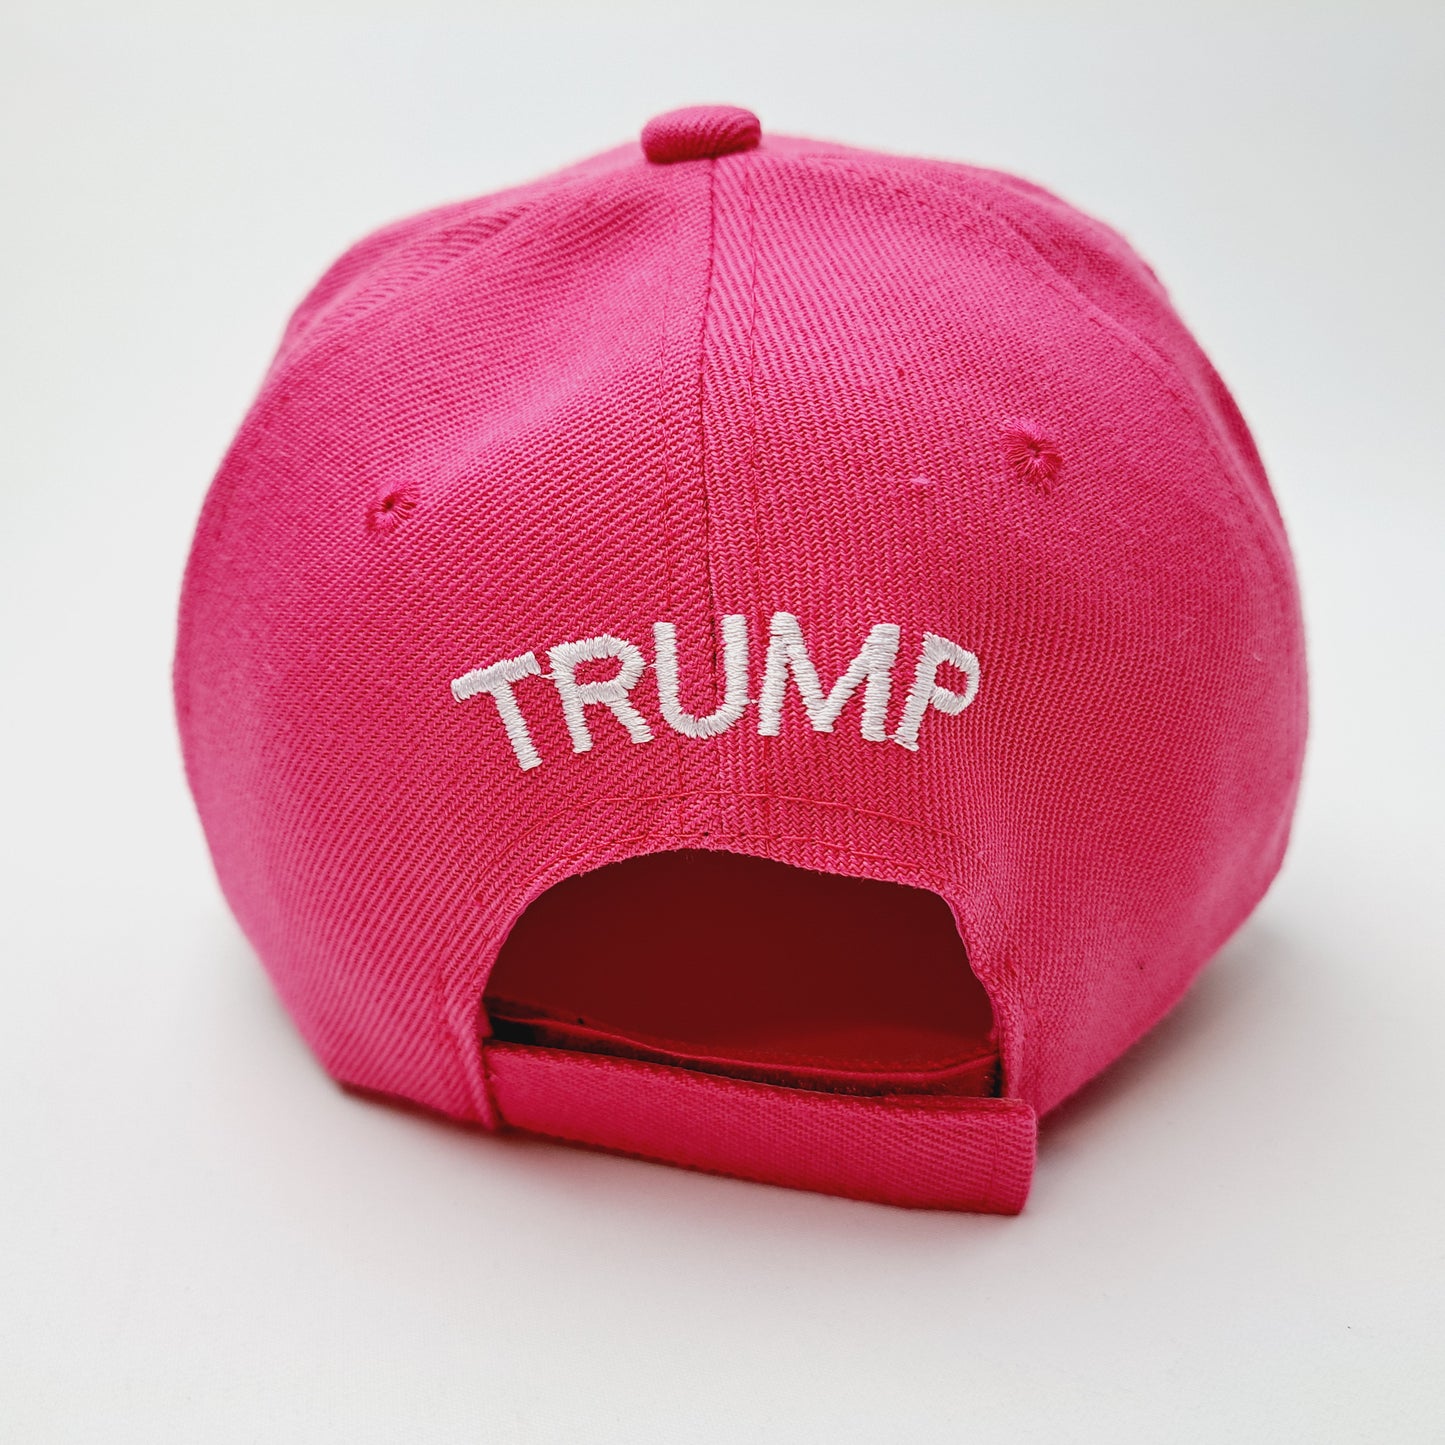 MAGA Trump Cap Hat Pink Womens Adjustable